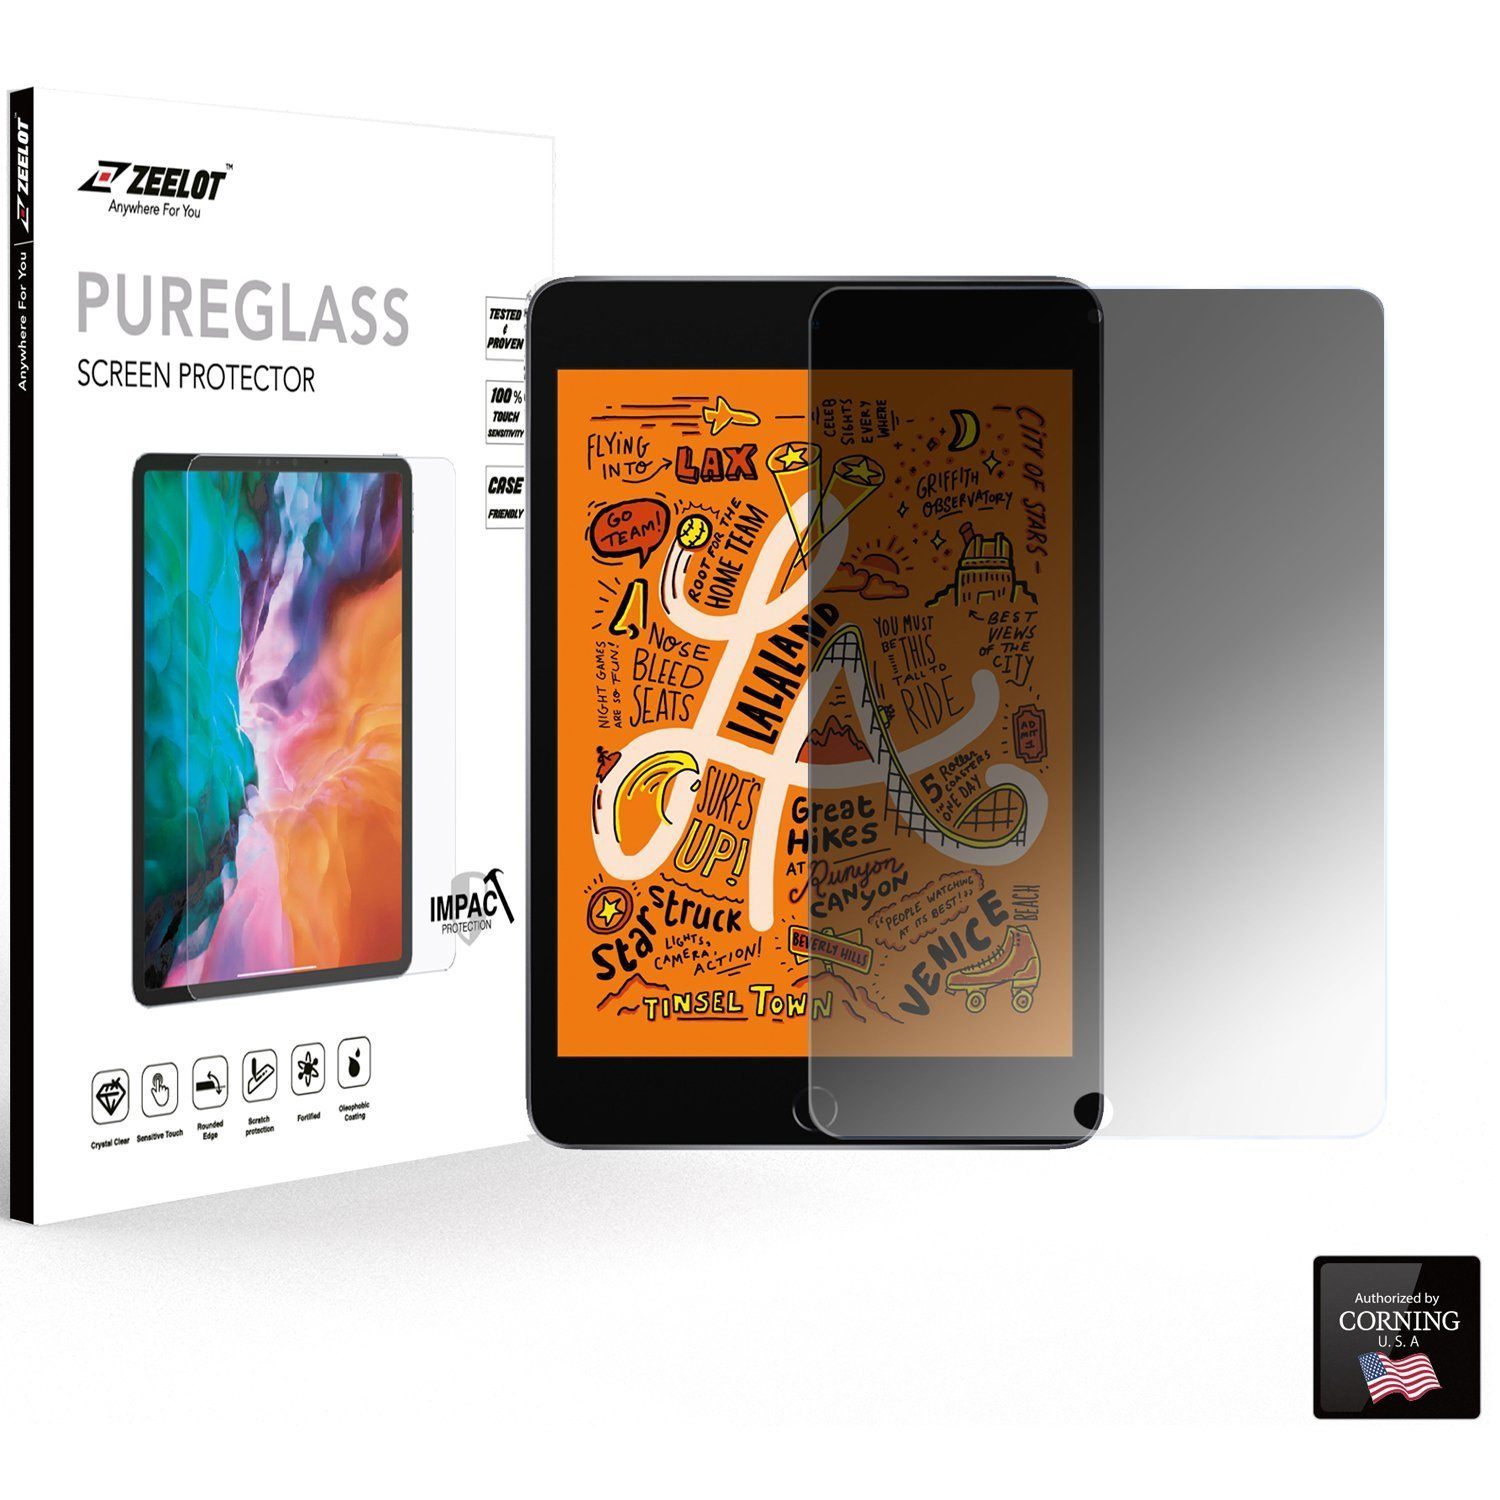 ZEELOT PureGlass 2.5D Tempered Glass Screen Protector for iPad Mini 5/4 7.9" (2019-2015), Privacy Default ZEELOT 